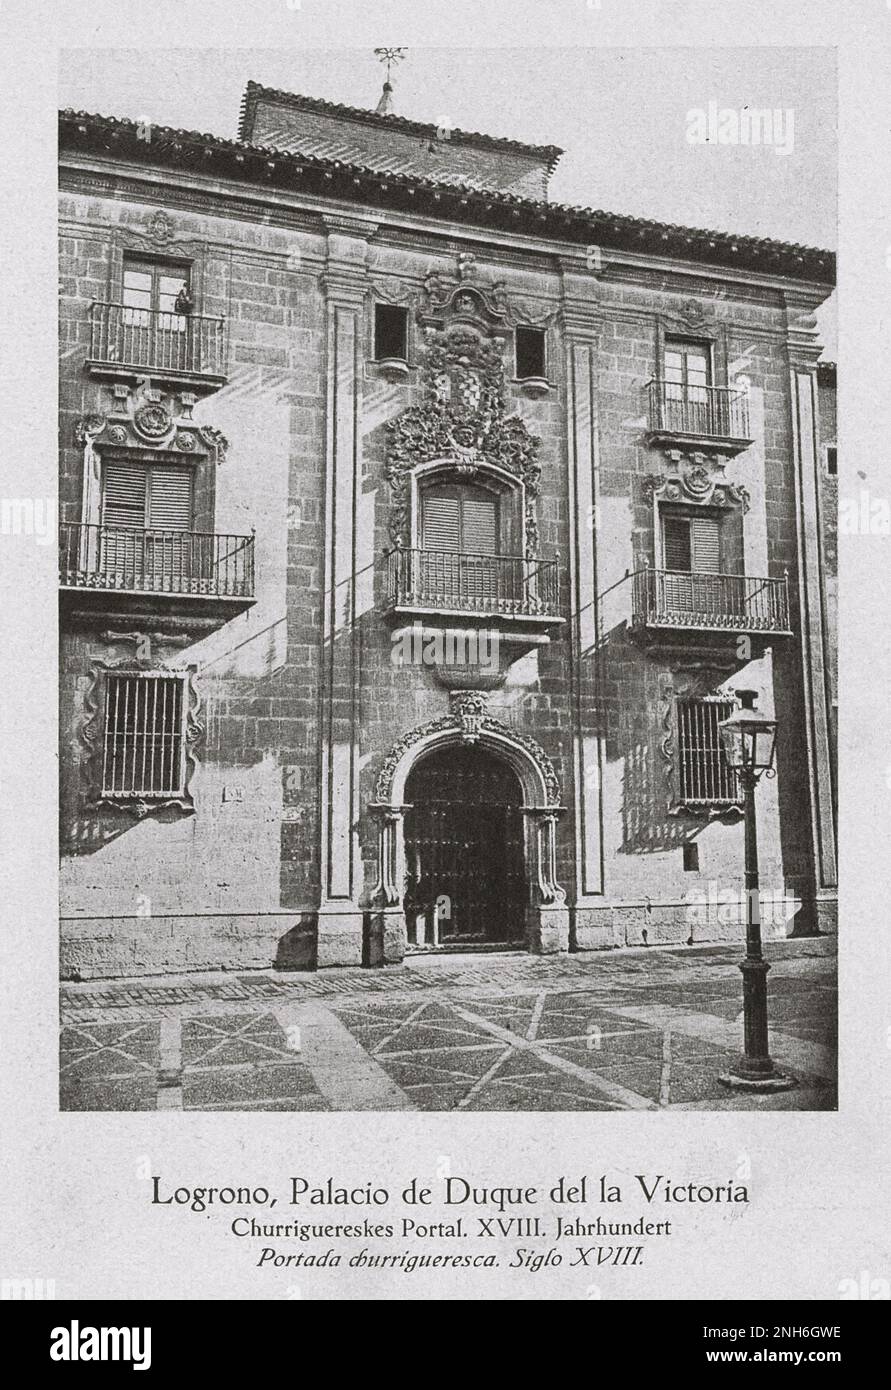 Architecture of Old Spain. Vintage photo of Palacio de Duque del la Victoria, Logrono. La Rioja Churrigueresque portal. XVIII century Stock Photo